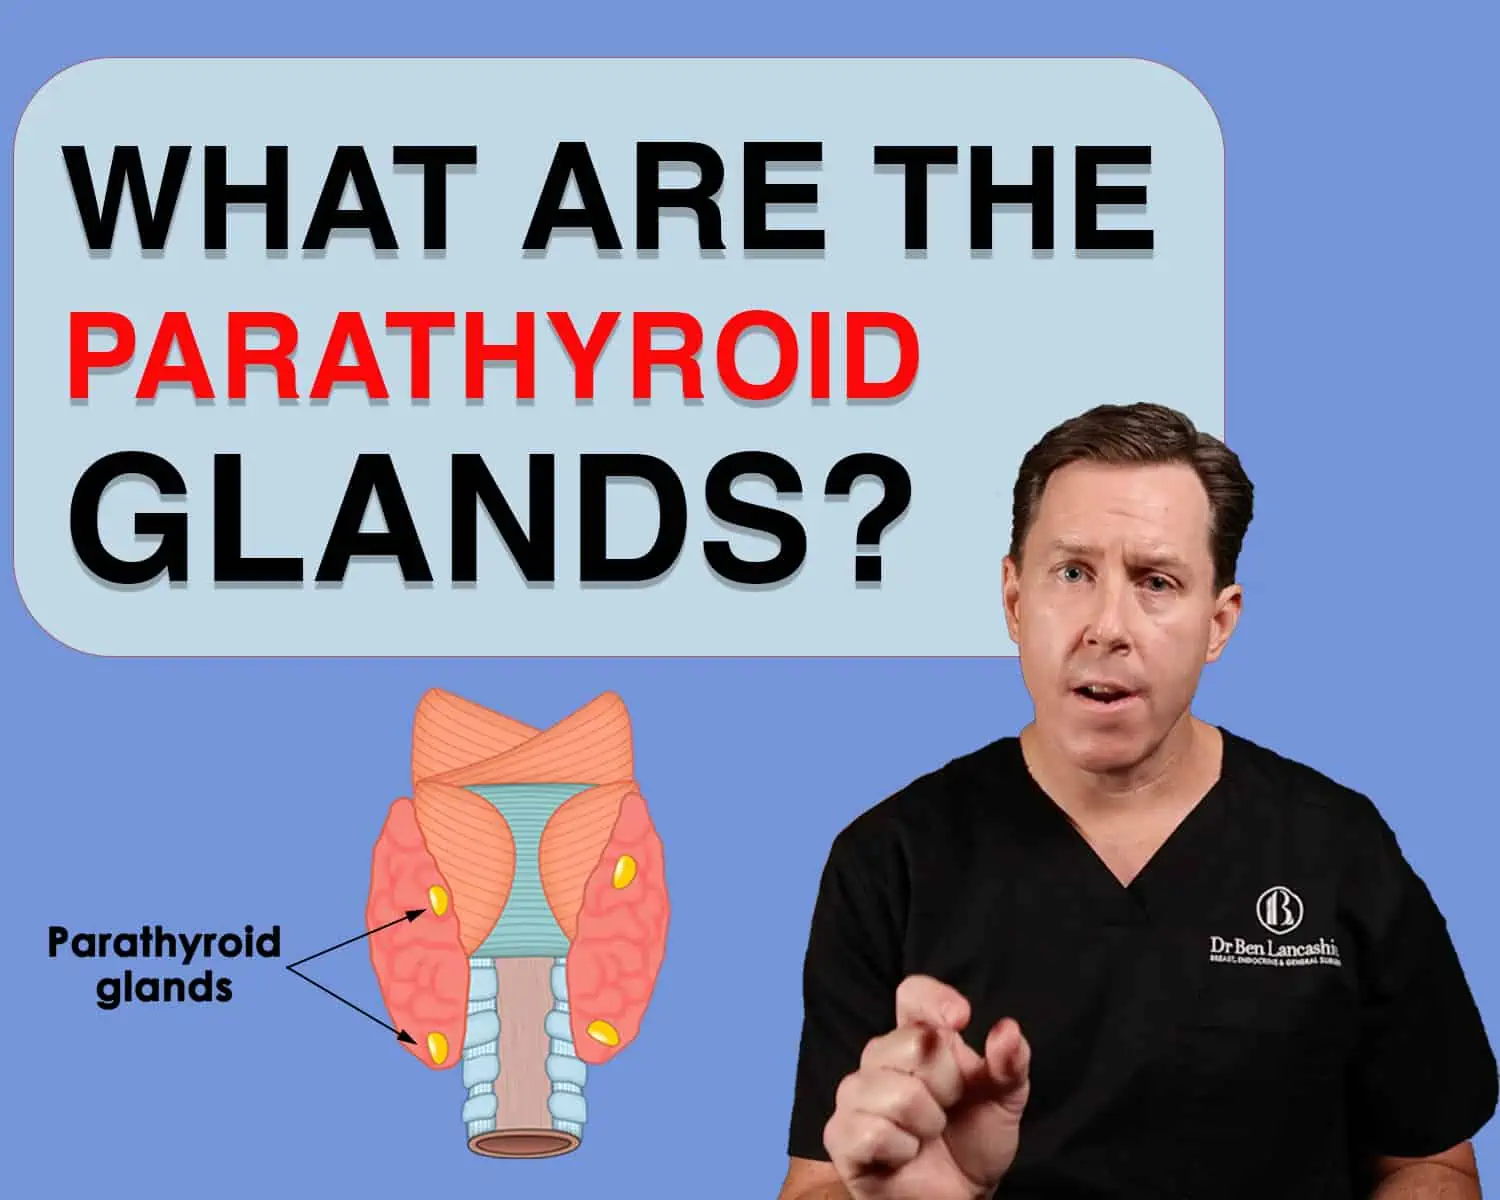 What are the parathyroid glands? Dr Ben explains.